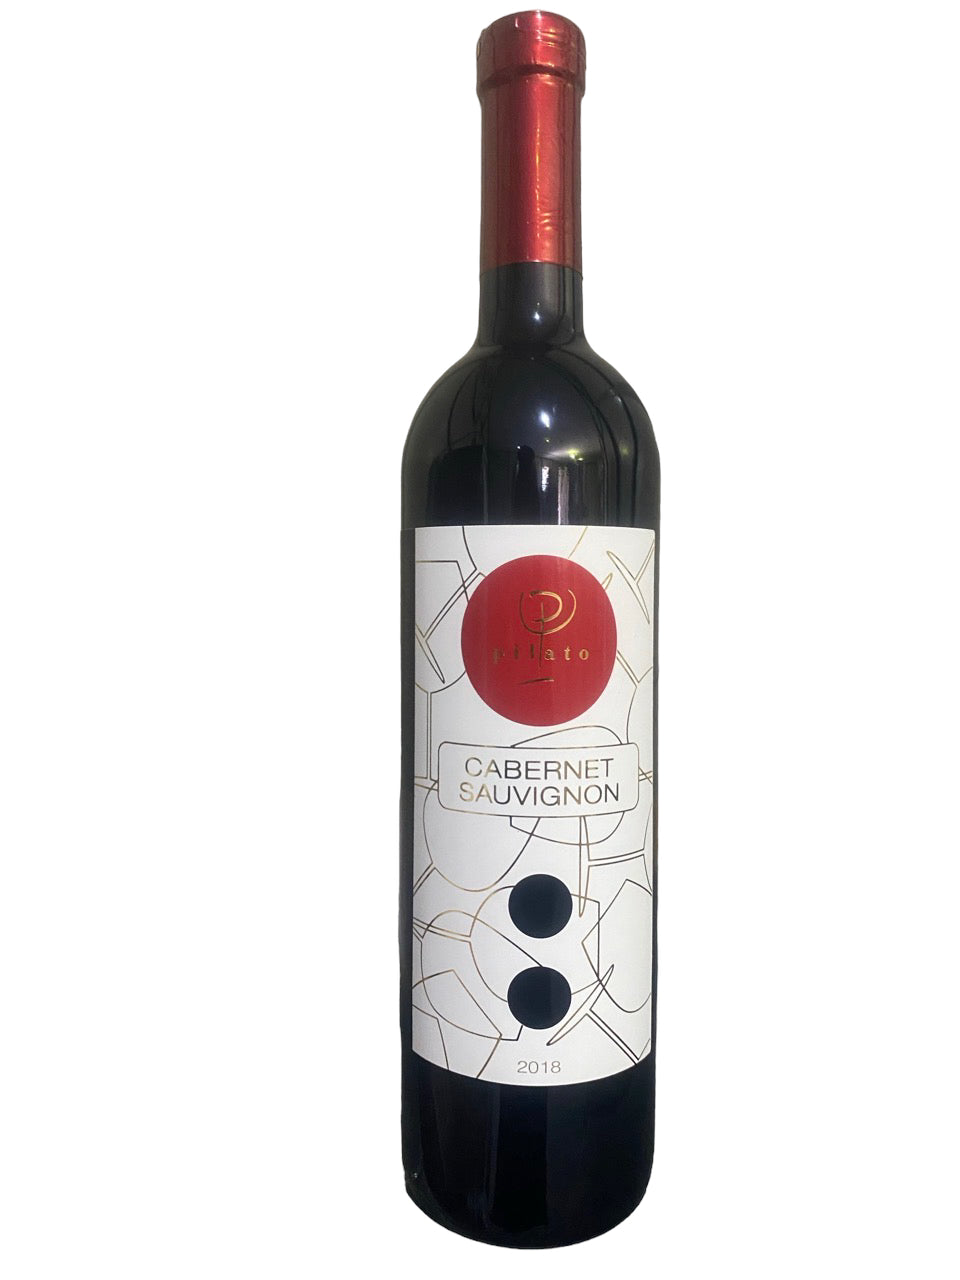 Crveno vino Cabernet Sauvignon Pilato 0,75l